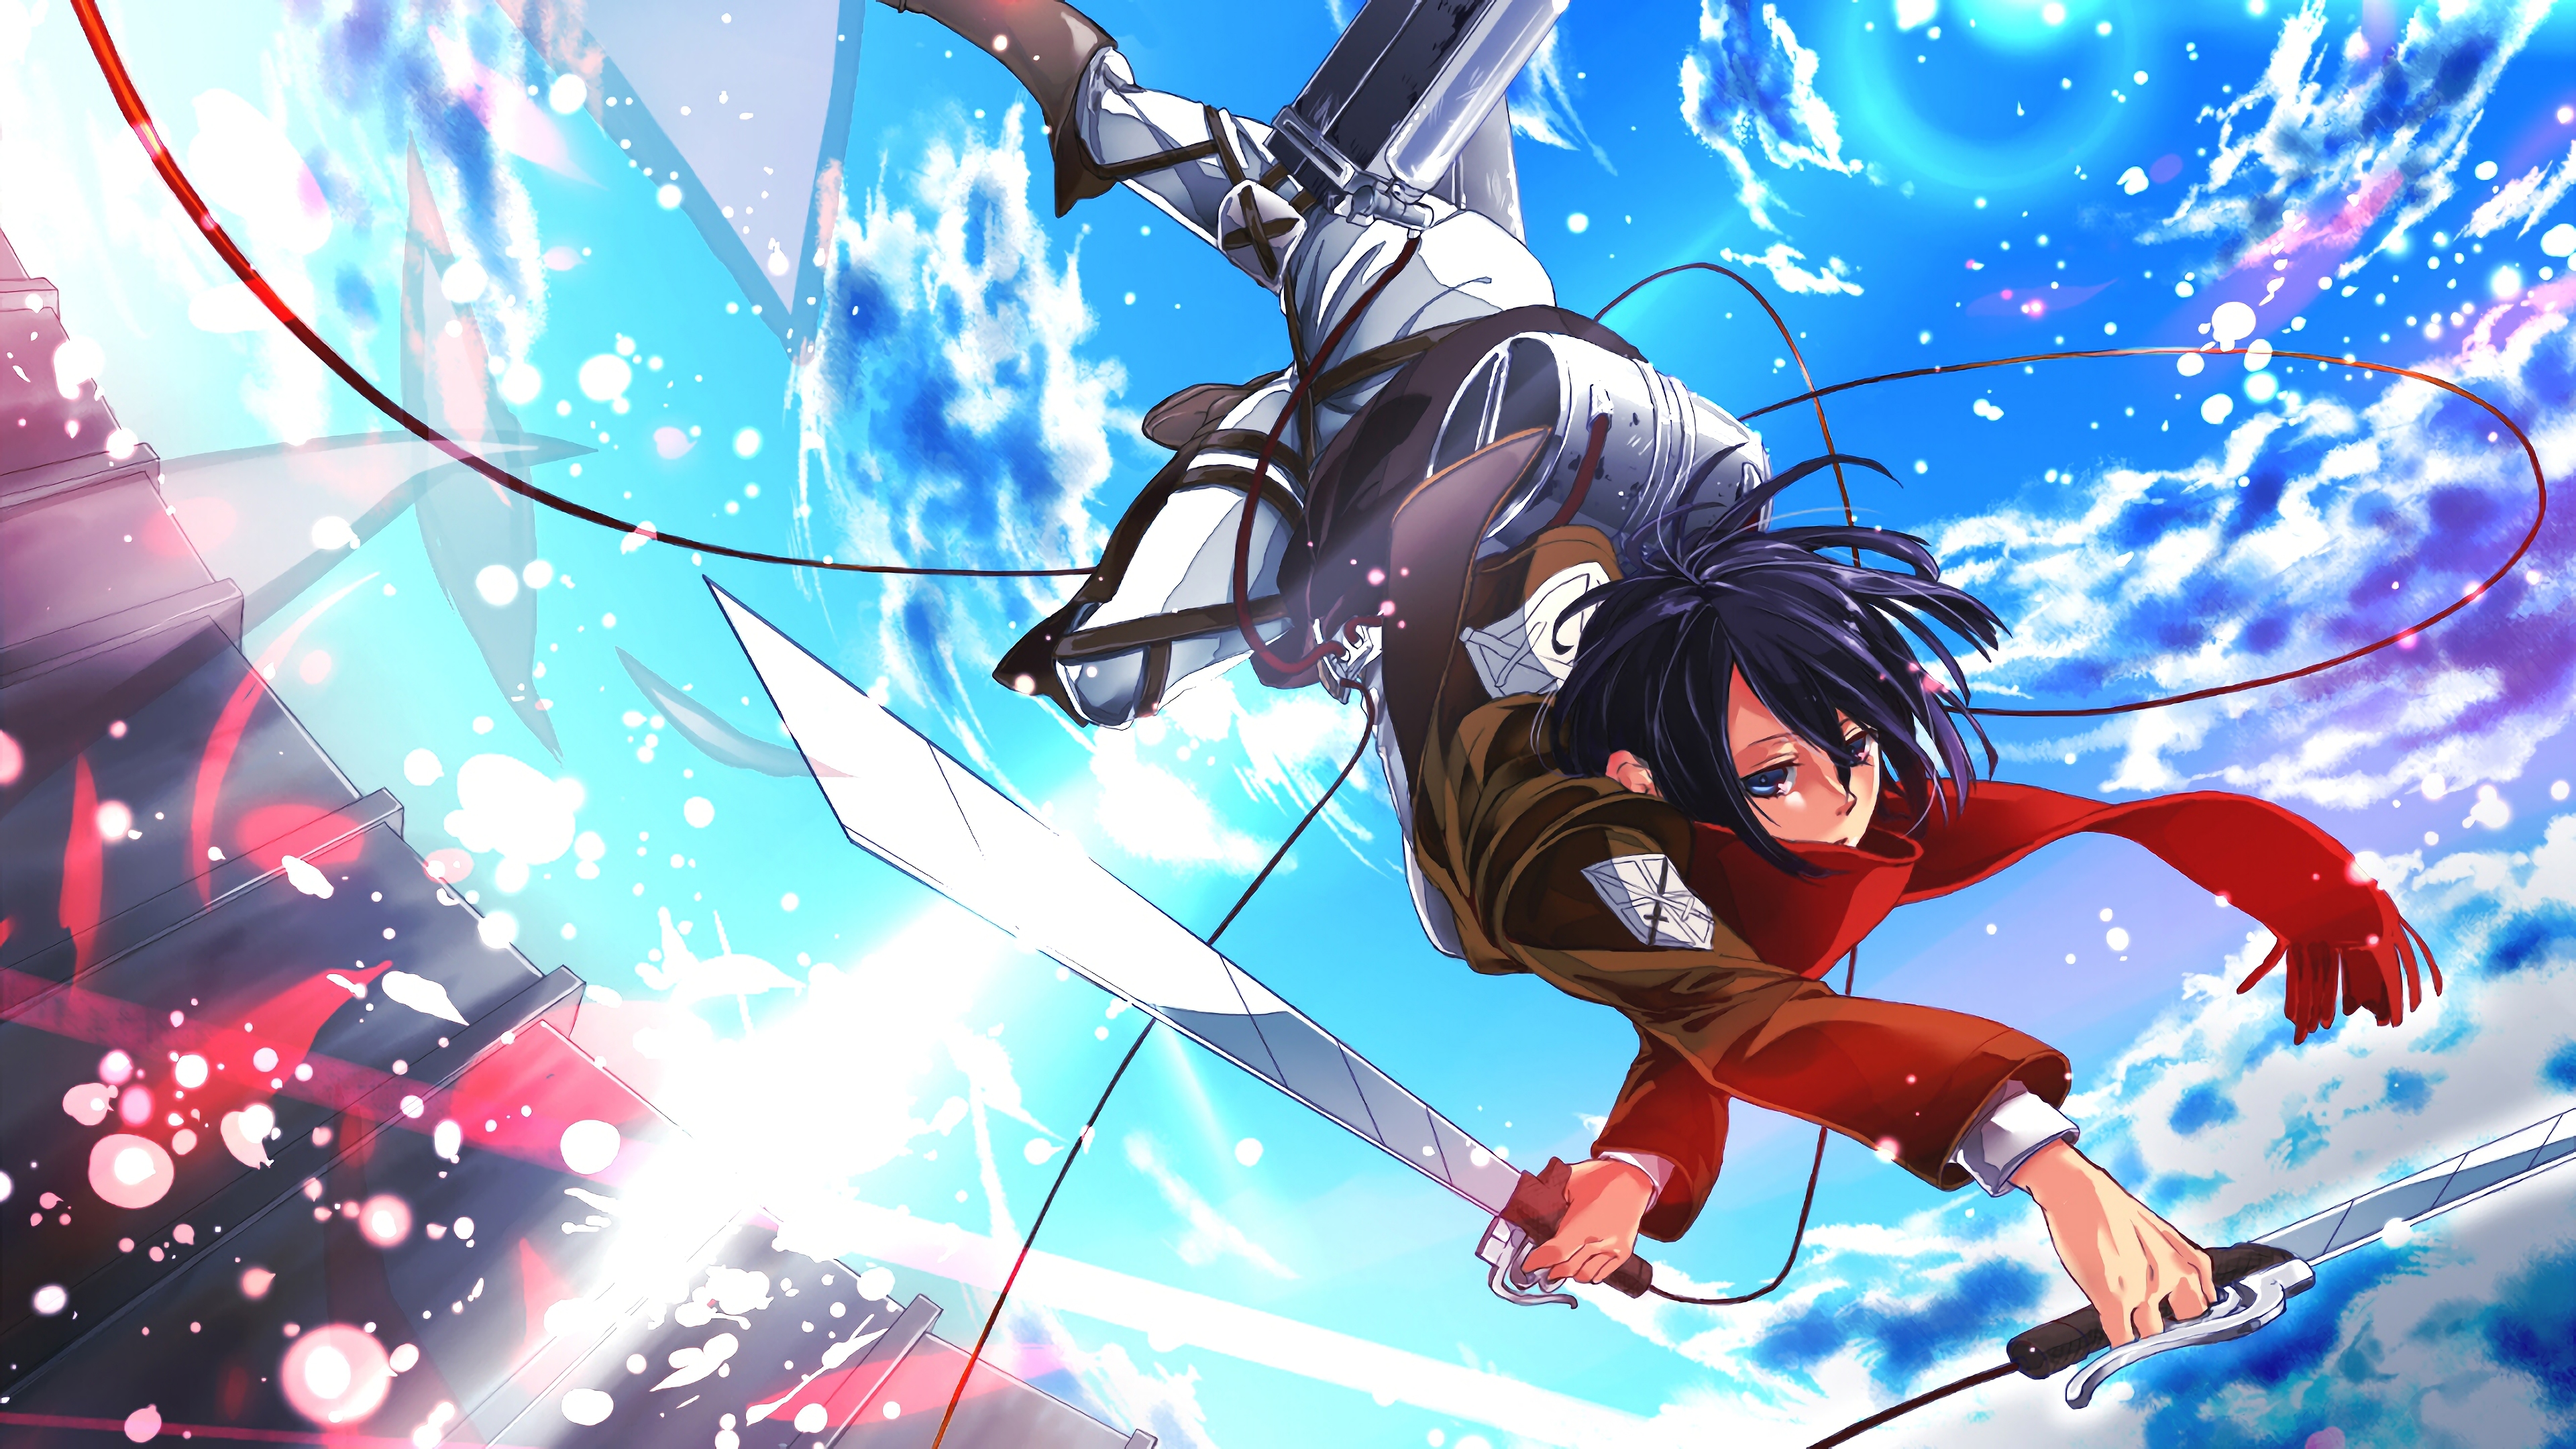 Anime 3840x2160 Shingeki no Kyojin Mikasa Ackerman black hair sky sword scarf flying anime girls